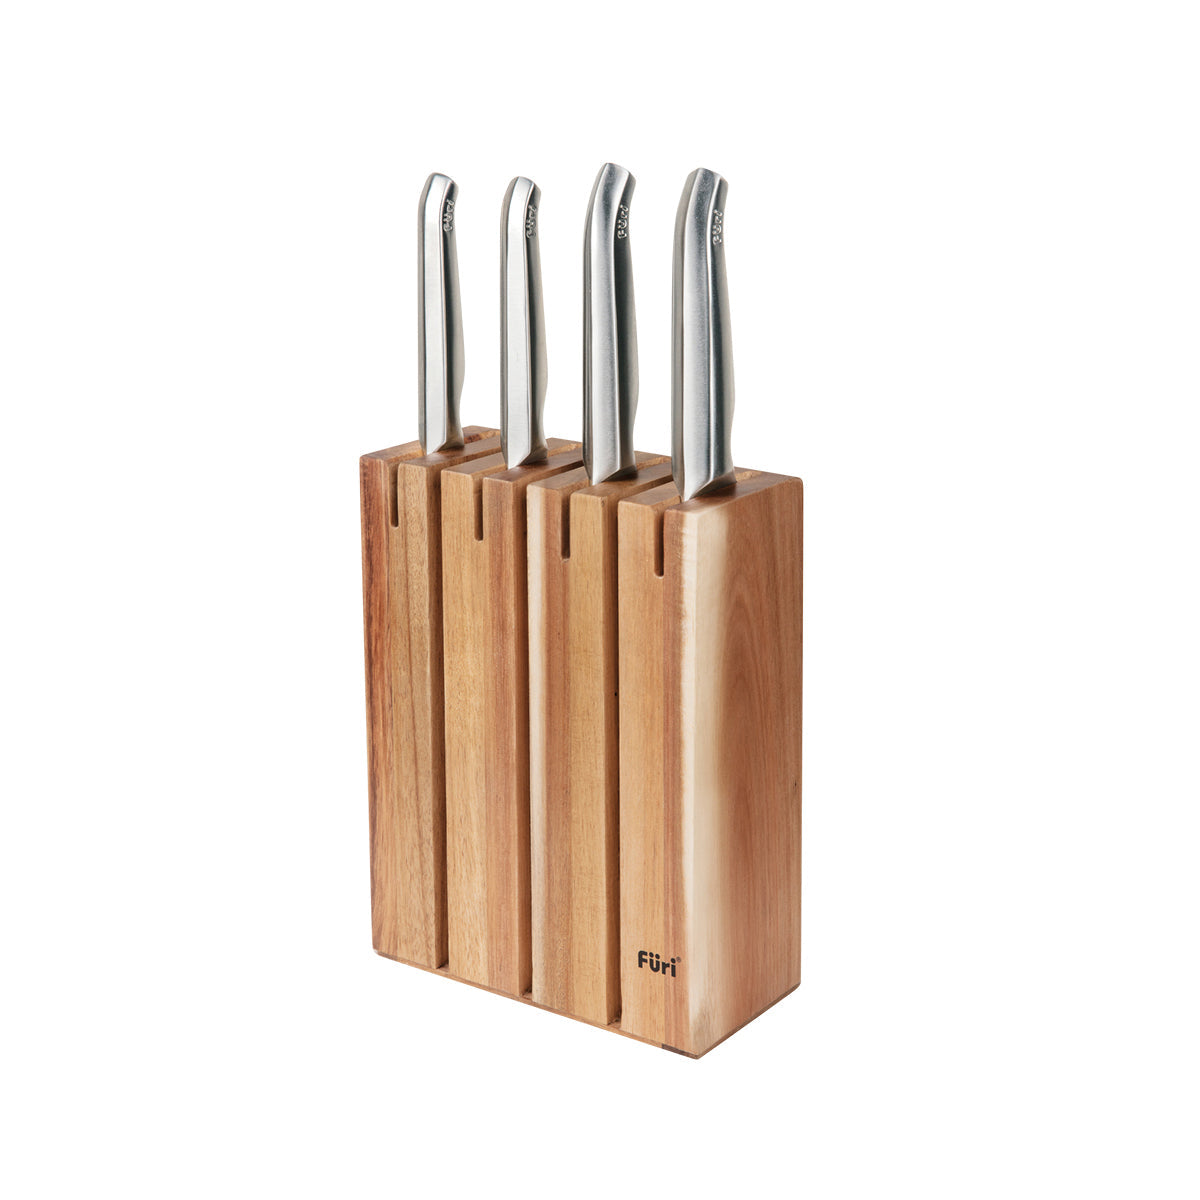 27133 Furi Pro Acacia Wood Knife Block Set 5pc Tomkin Australia Hospitality Supplies